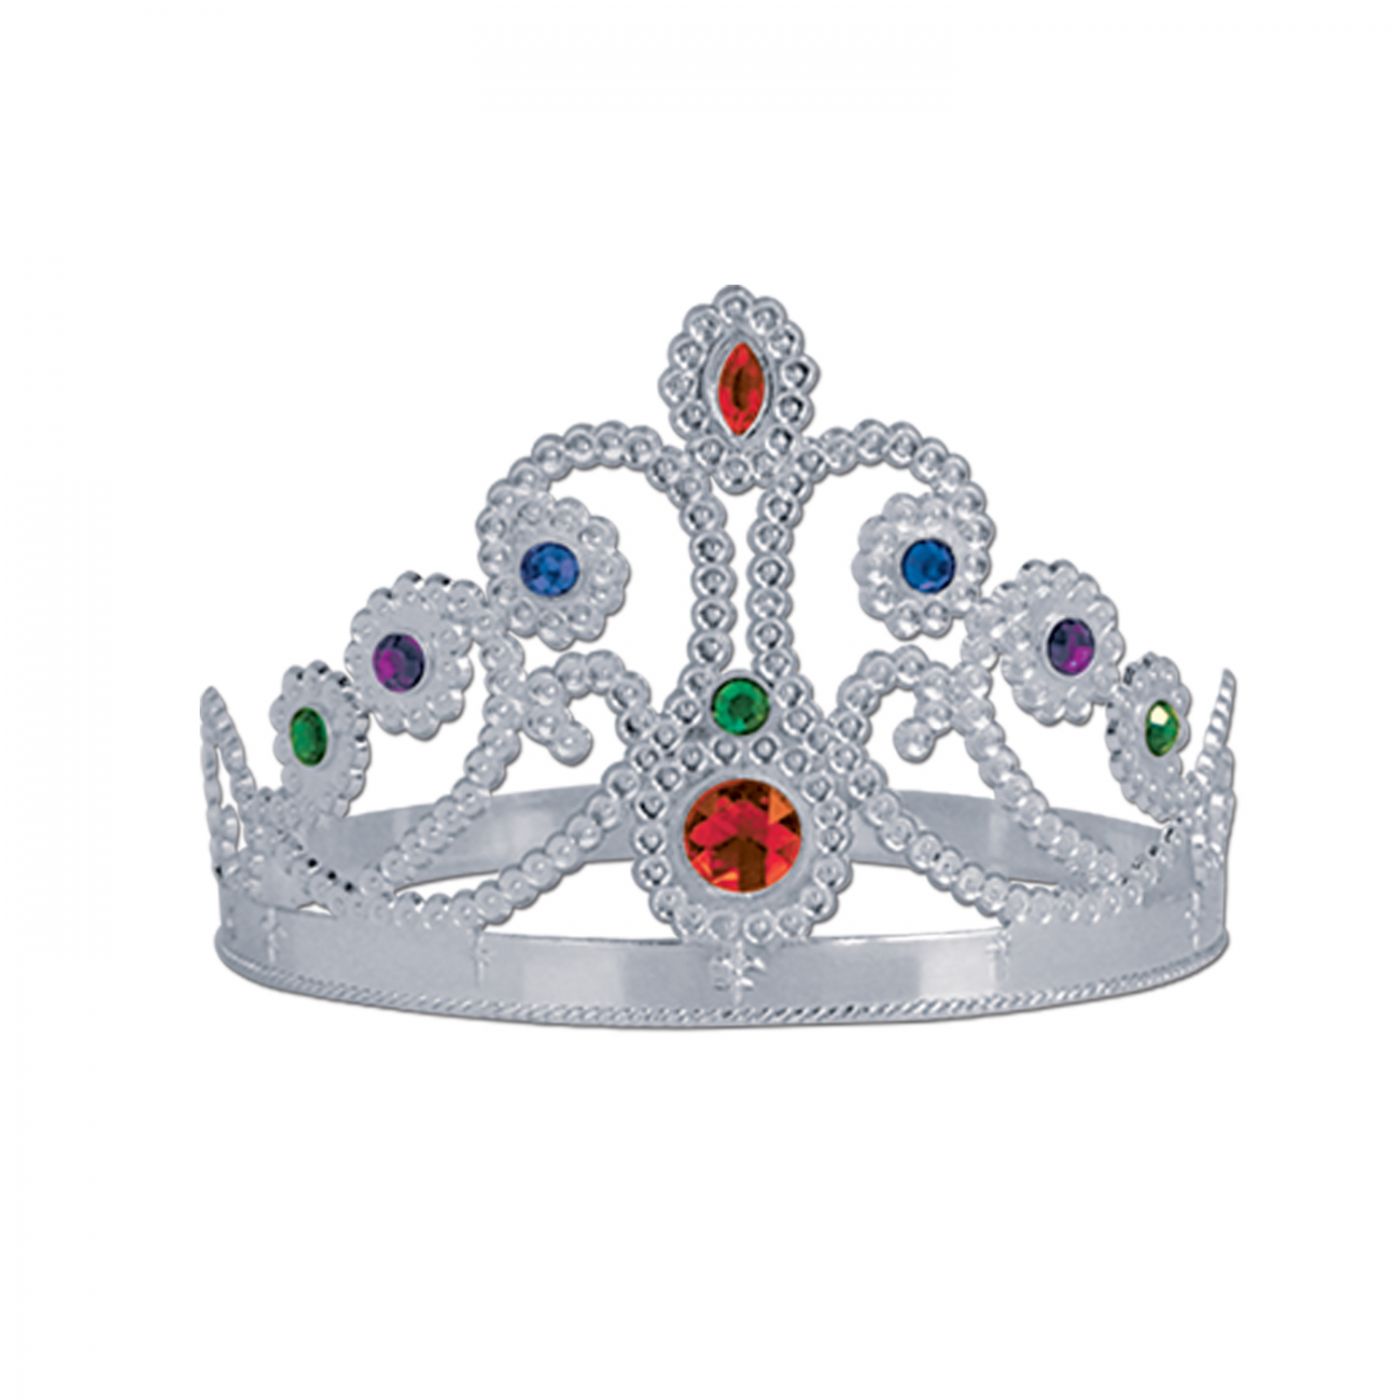 Plastic Jeweled Queen's Tiara image